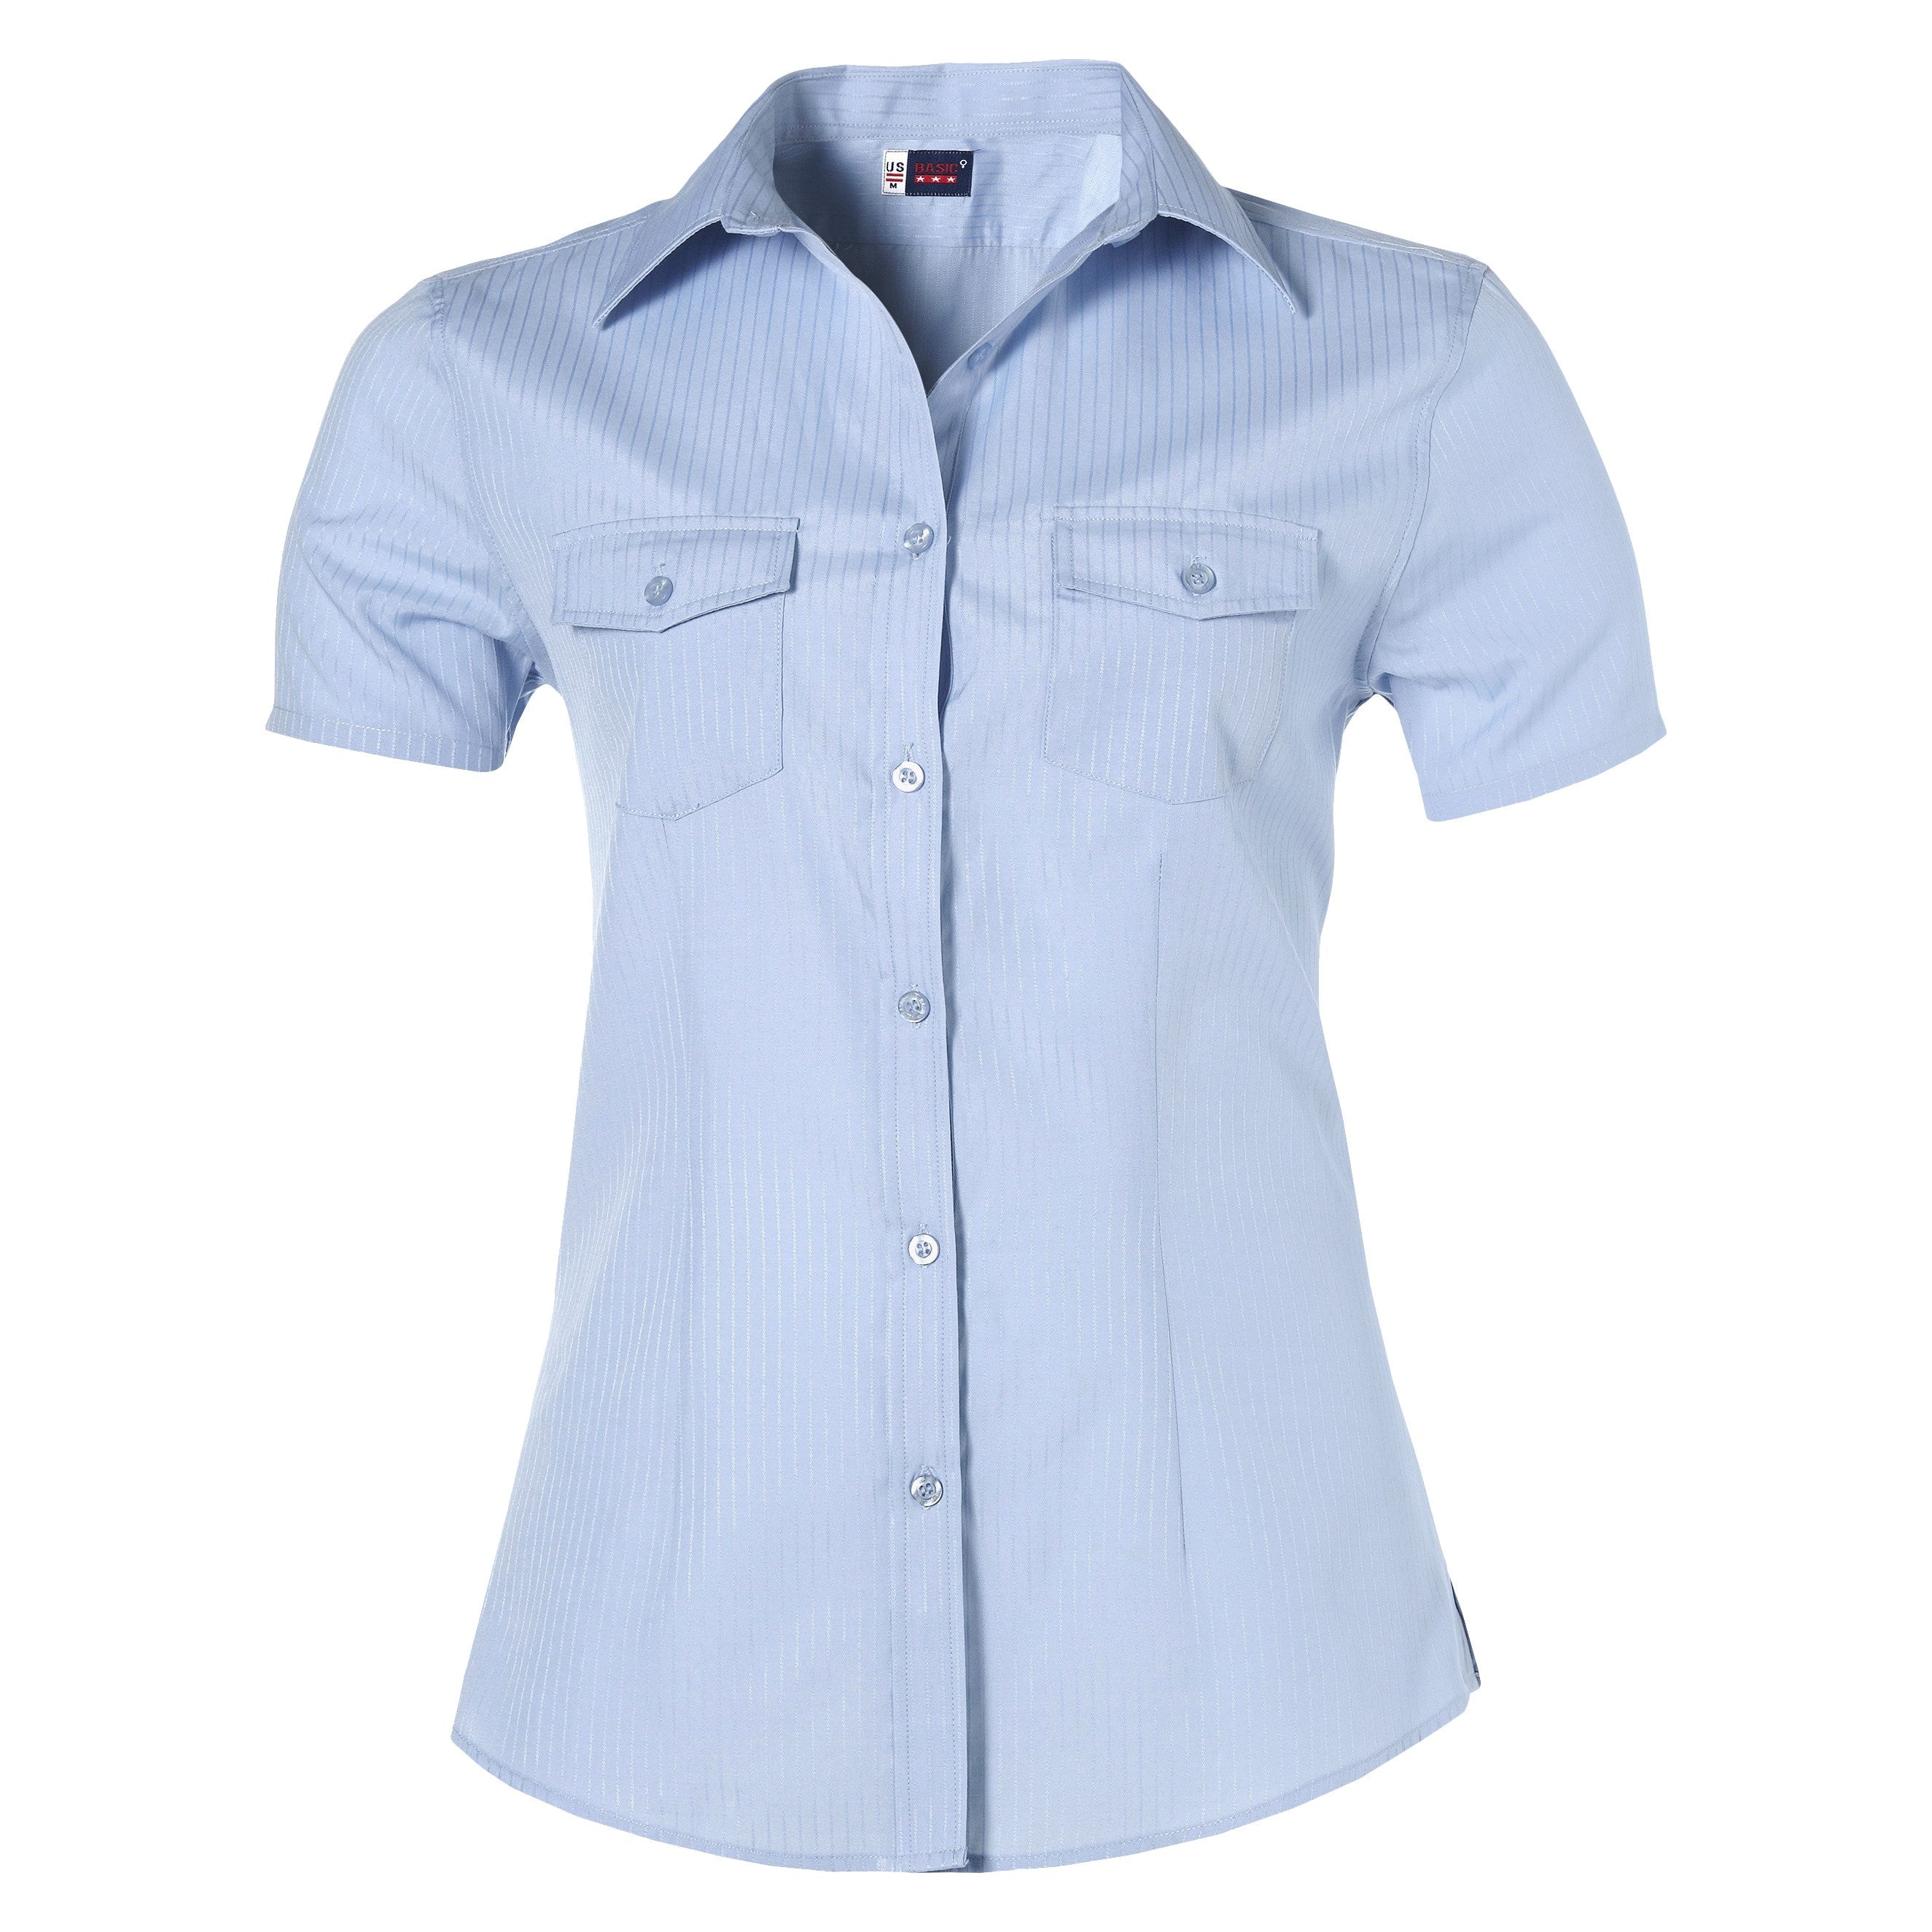 Ladies Short Sleeve Bayport Shirt - Black Only-2XL-Light Blue-LB